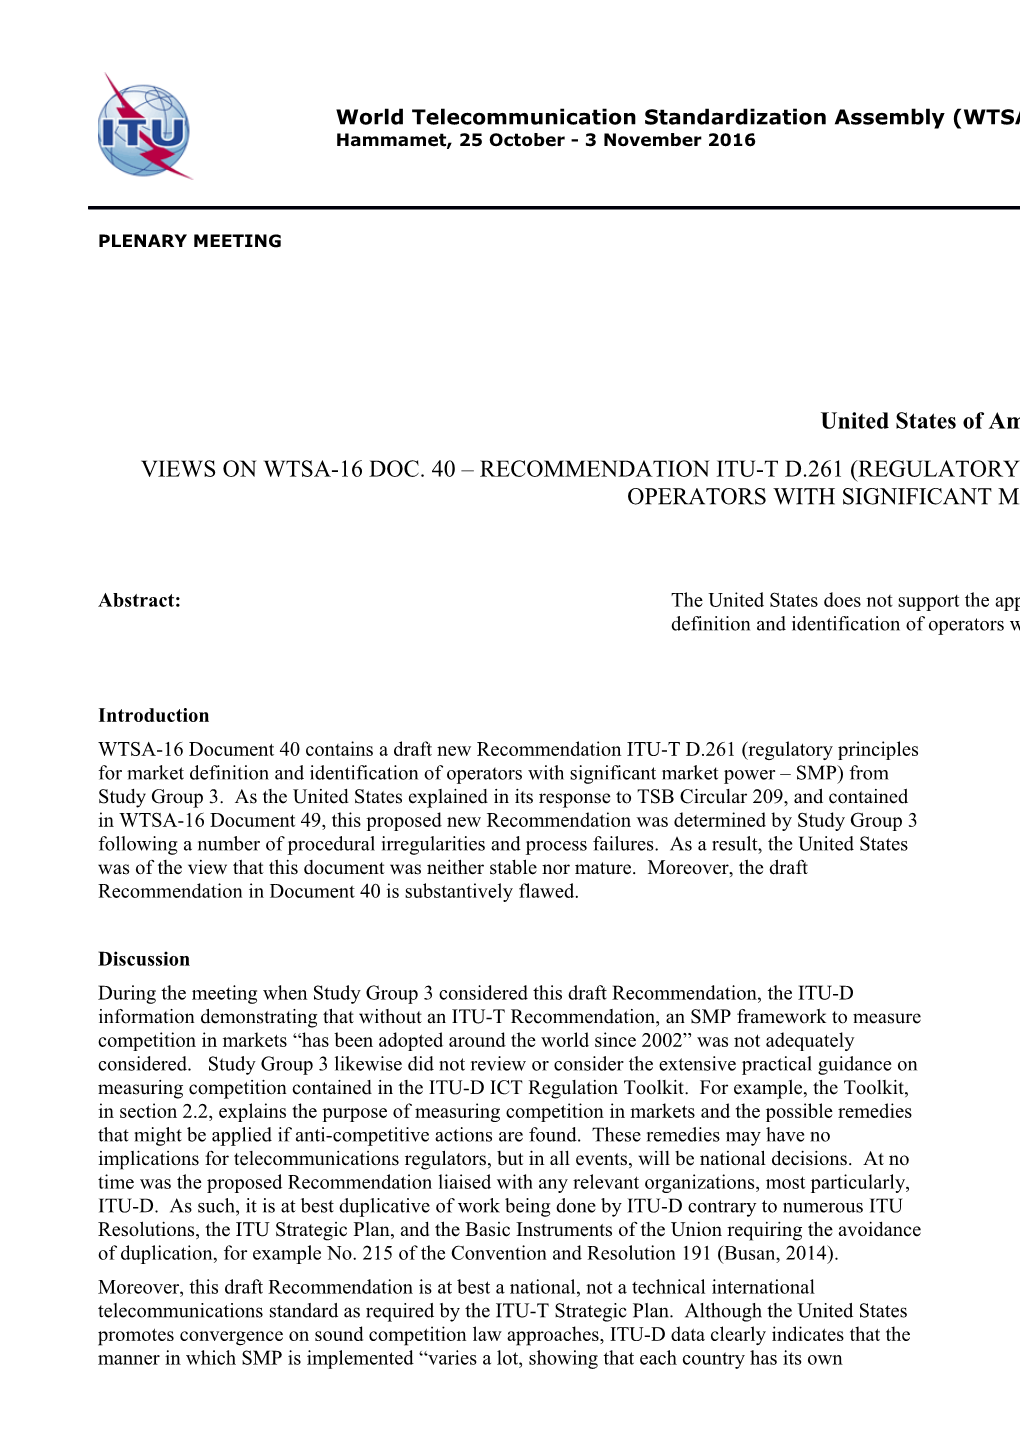 WTSA-16 Document 40 Contains a Draft New Recommendation ITU-T D.261 (Regulatory Principles